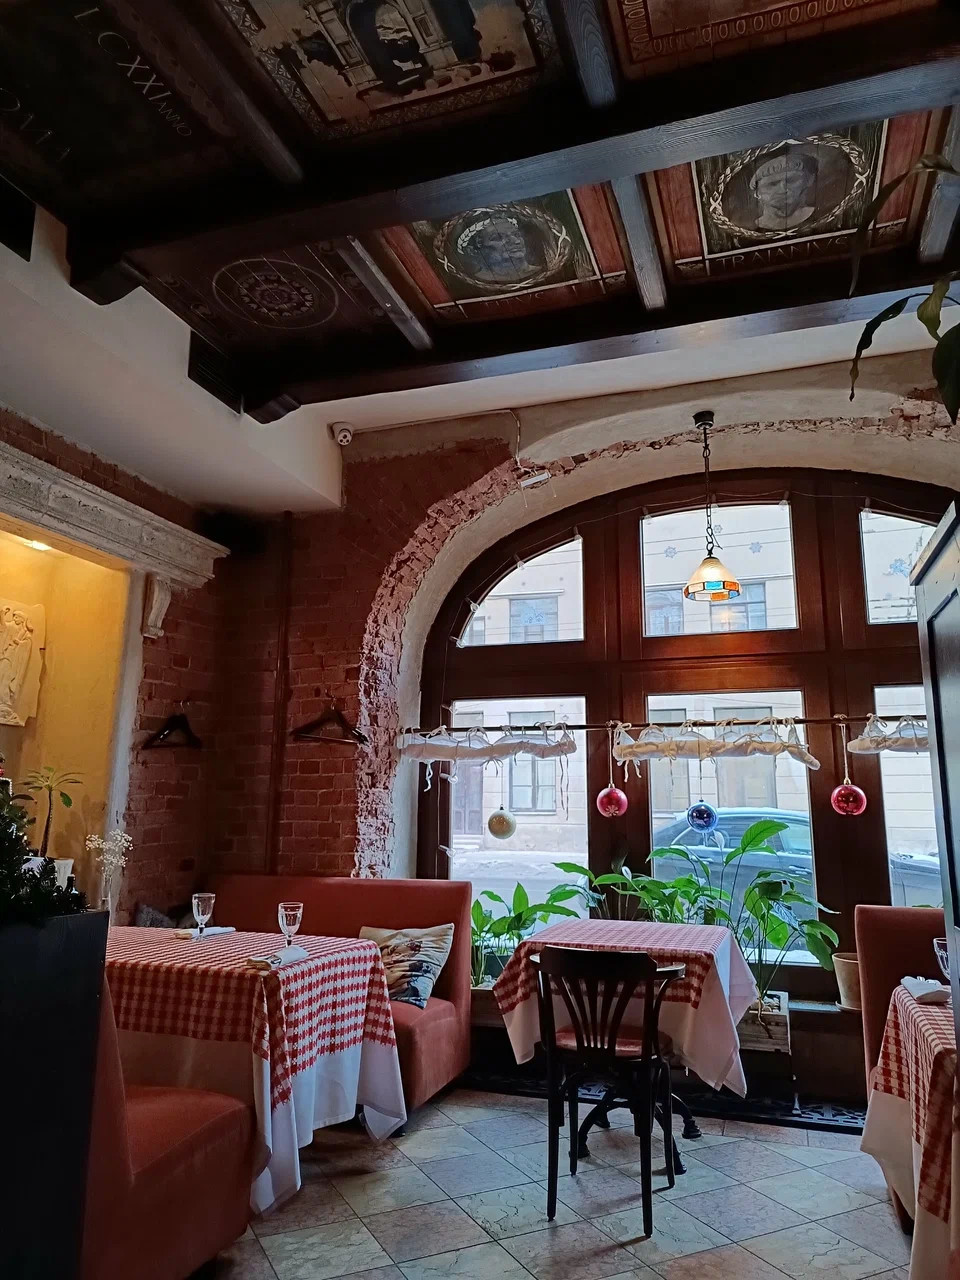 Ресторан Мама Рома / Mama Roma Зал в стиле итальянского патио